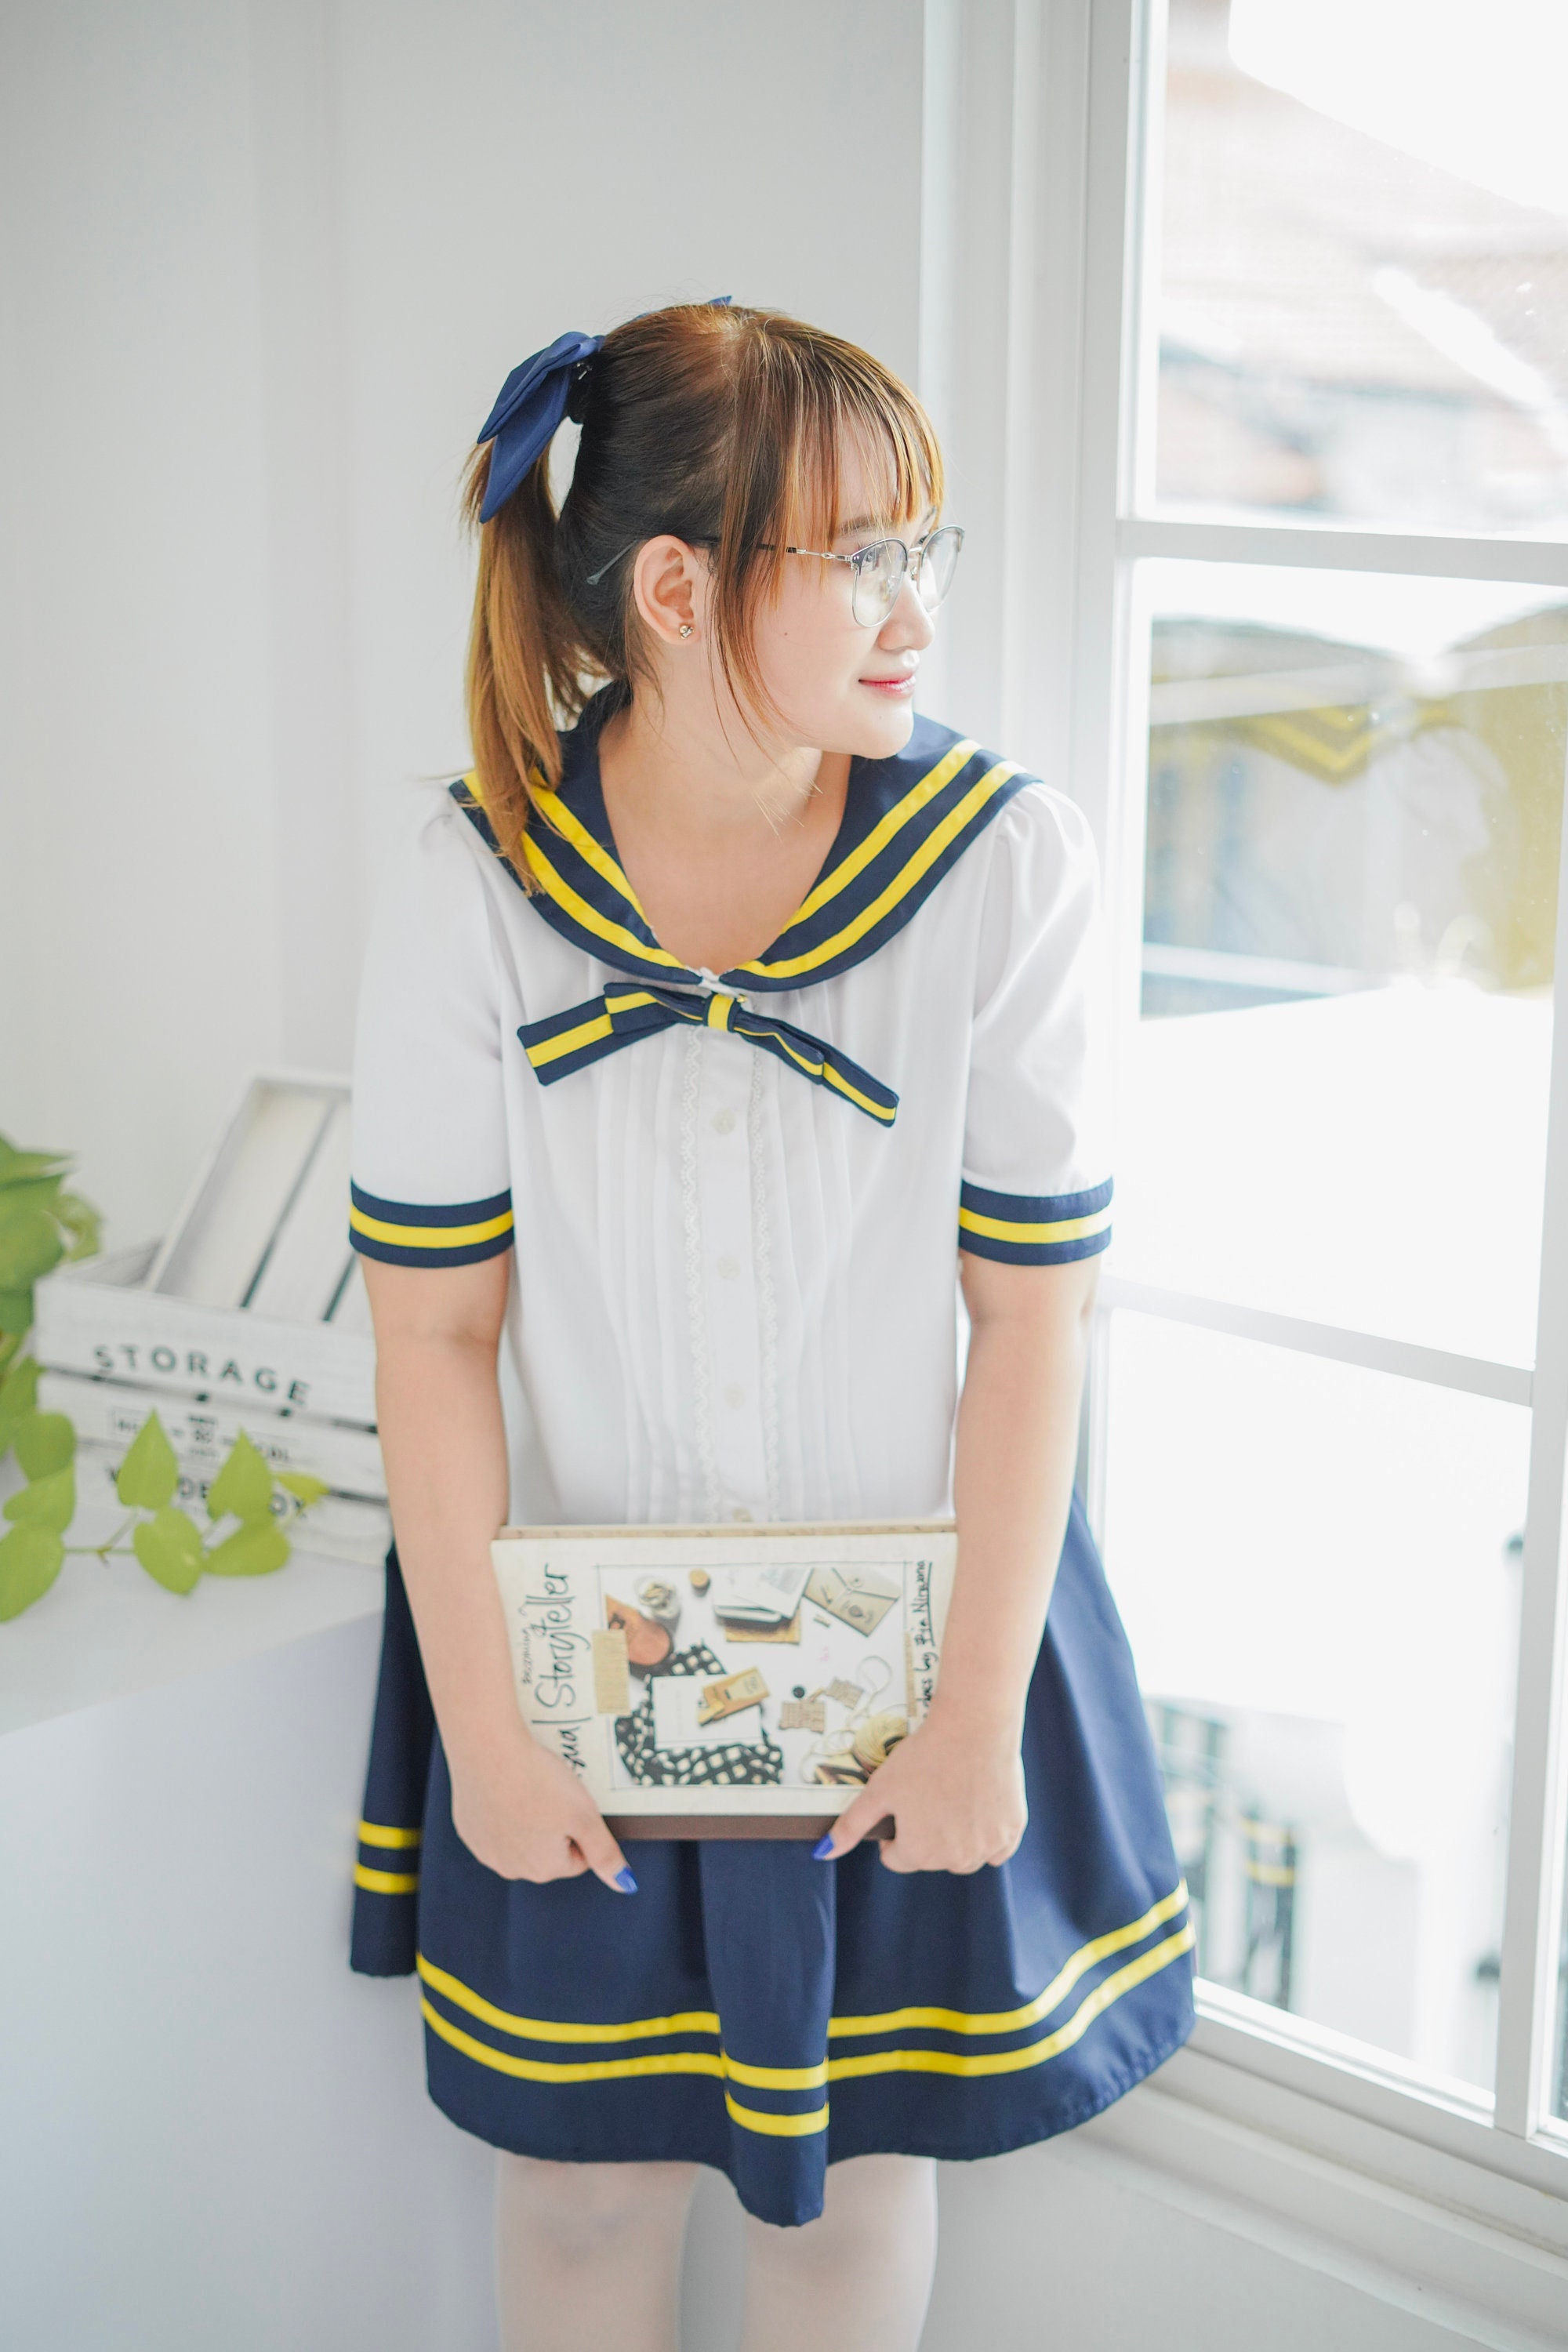 Japan School Girl - Etsy